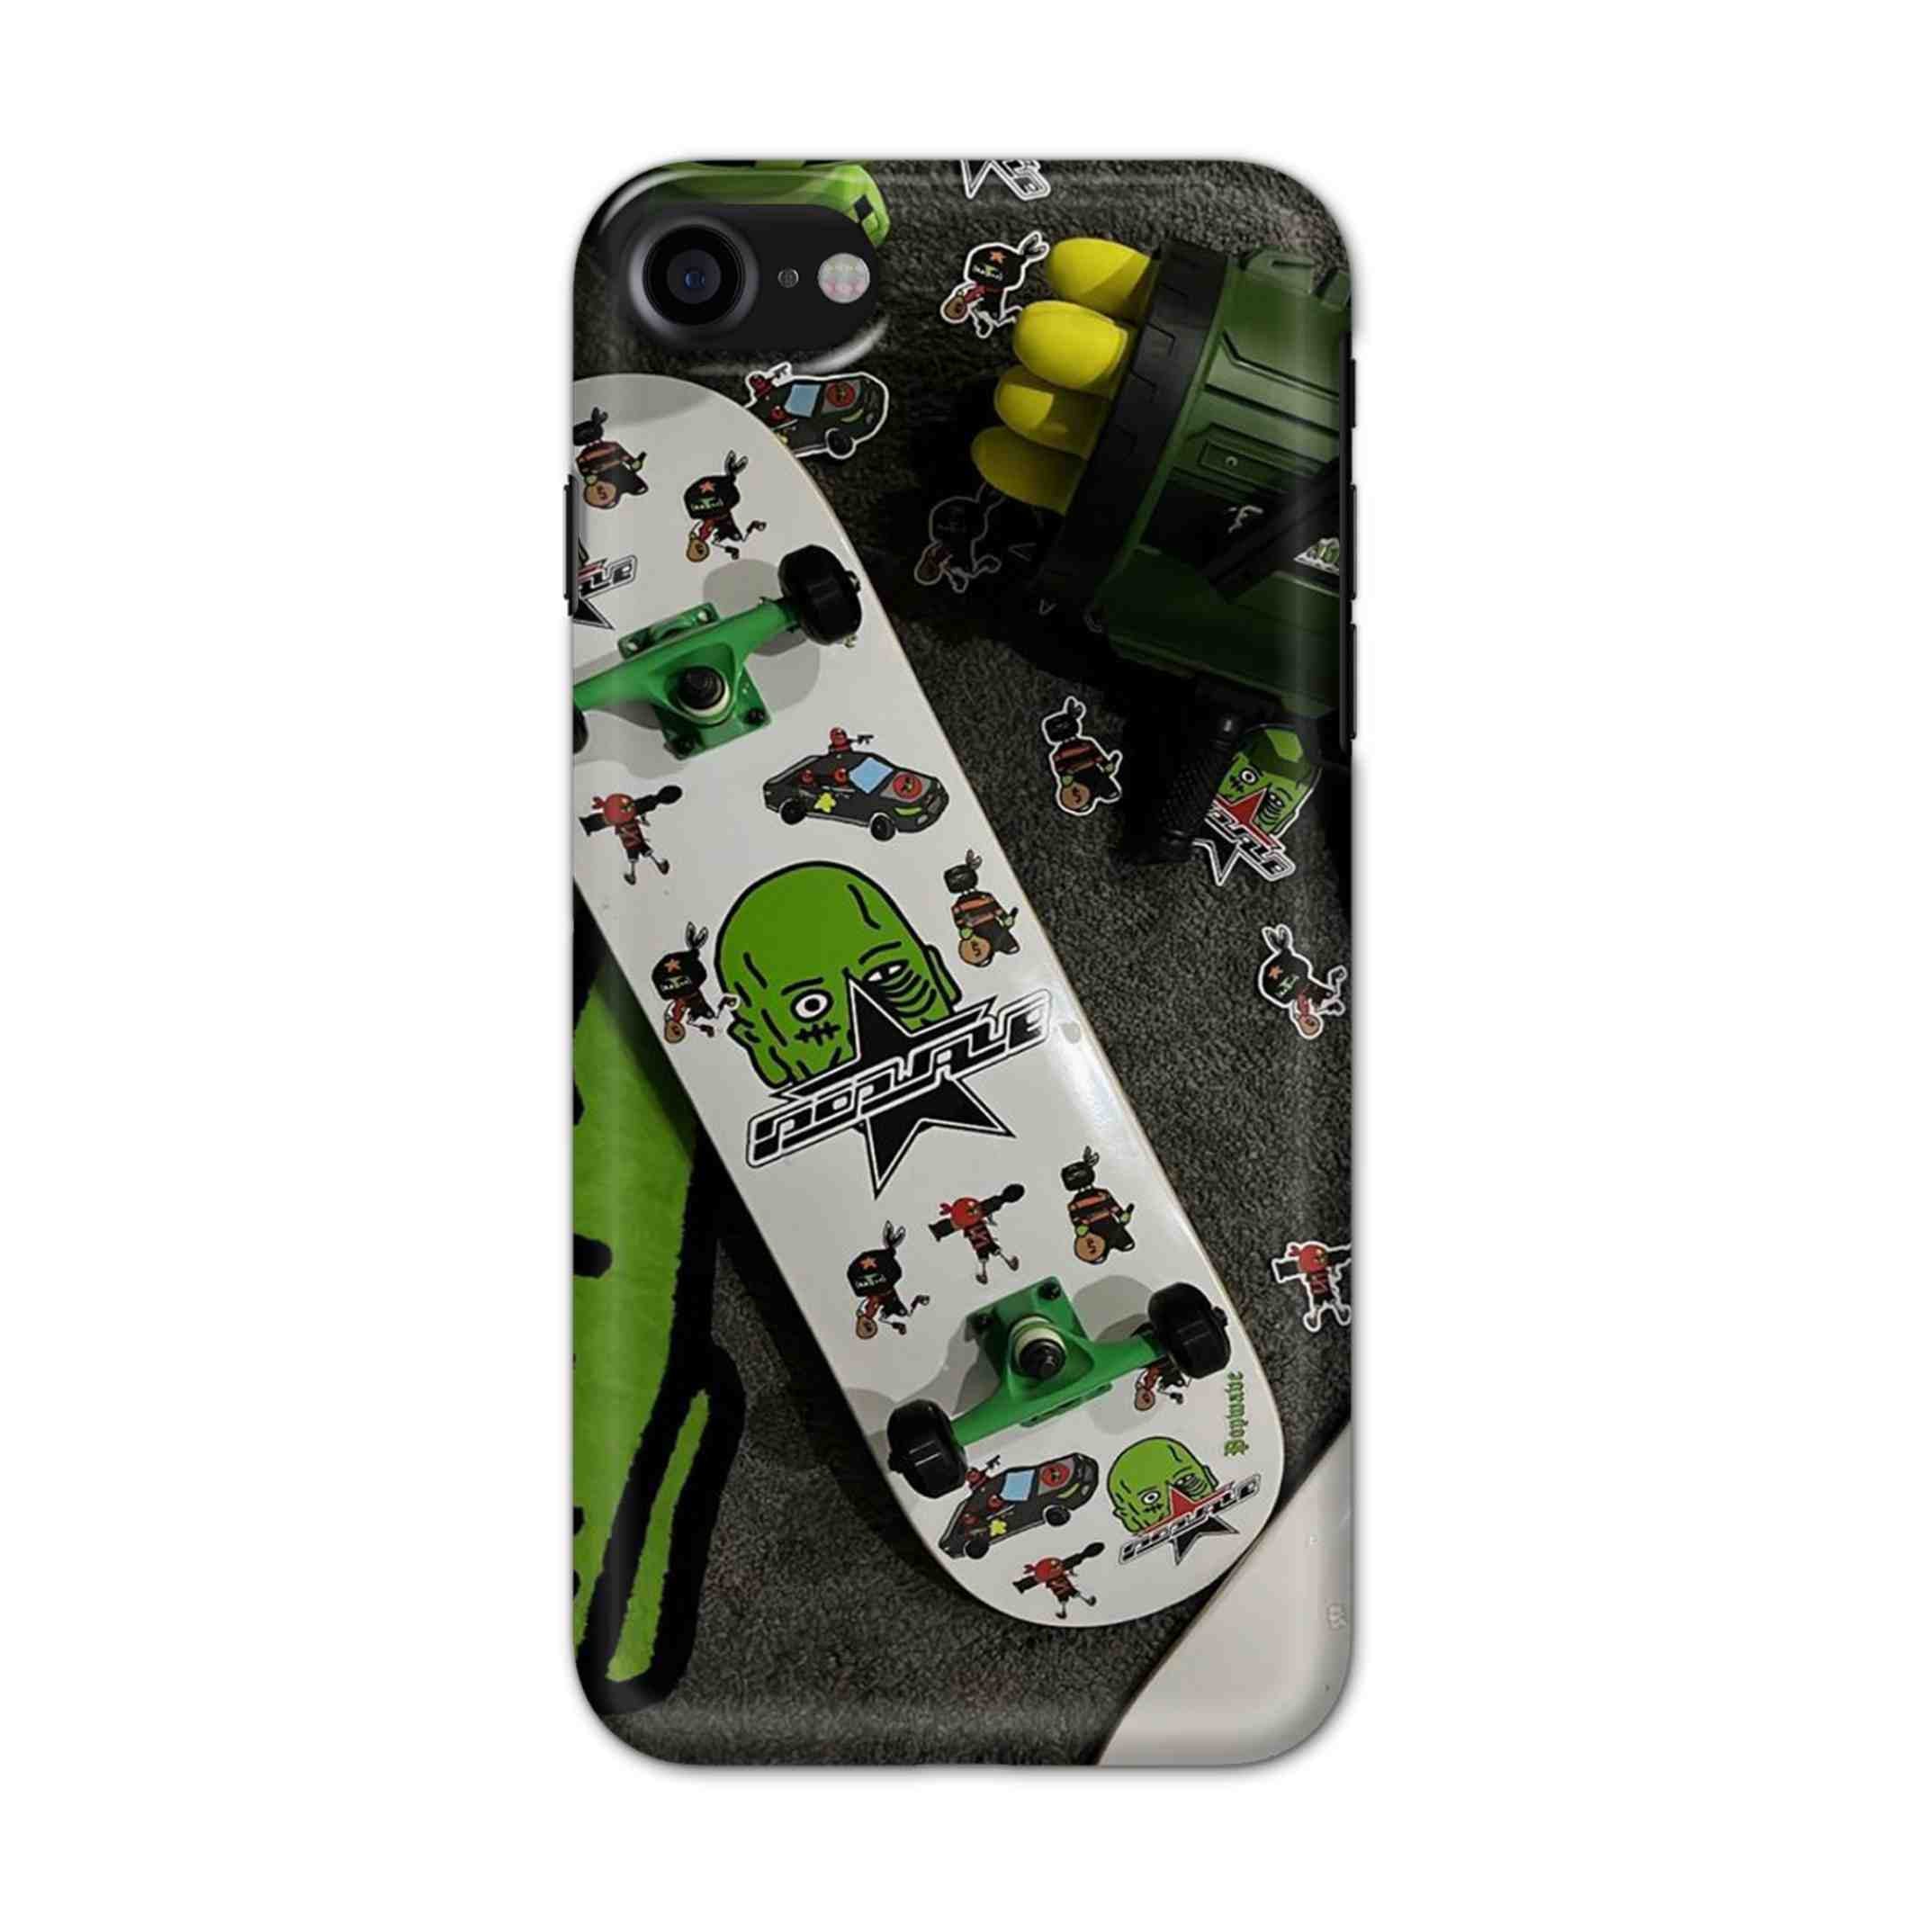 Buy Hulk Skateboard Hard Back Mobile Phone Case/Cover For iPhone 7 / 8 Online